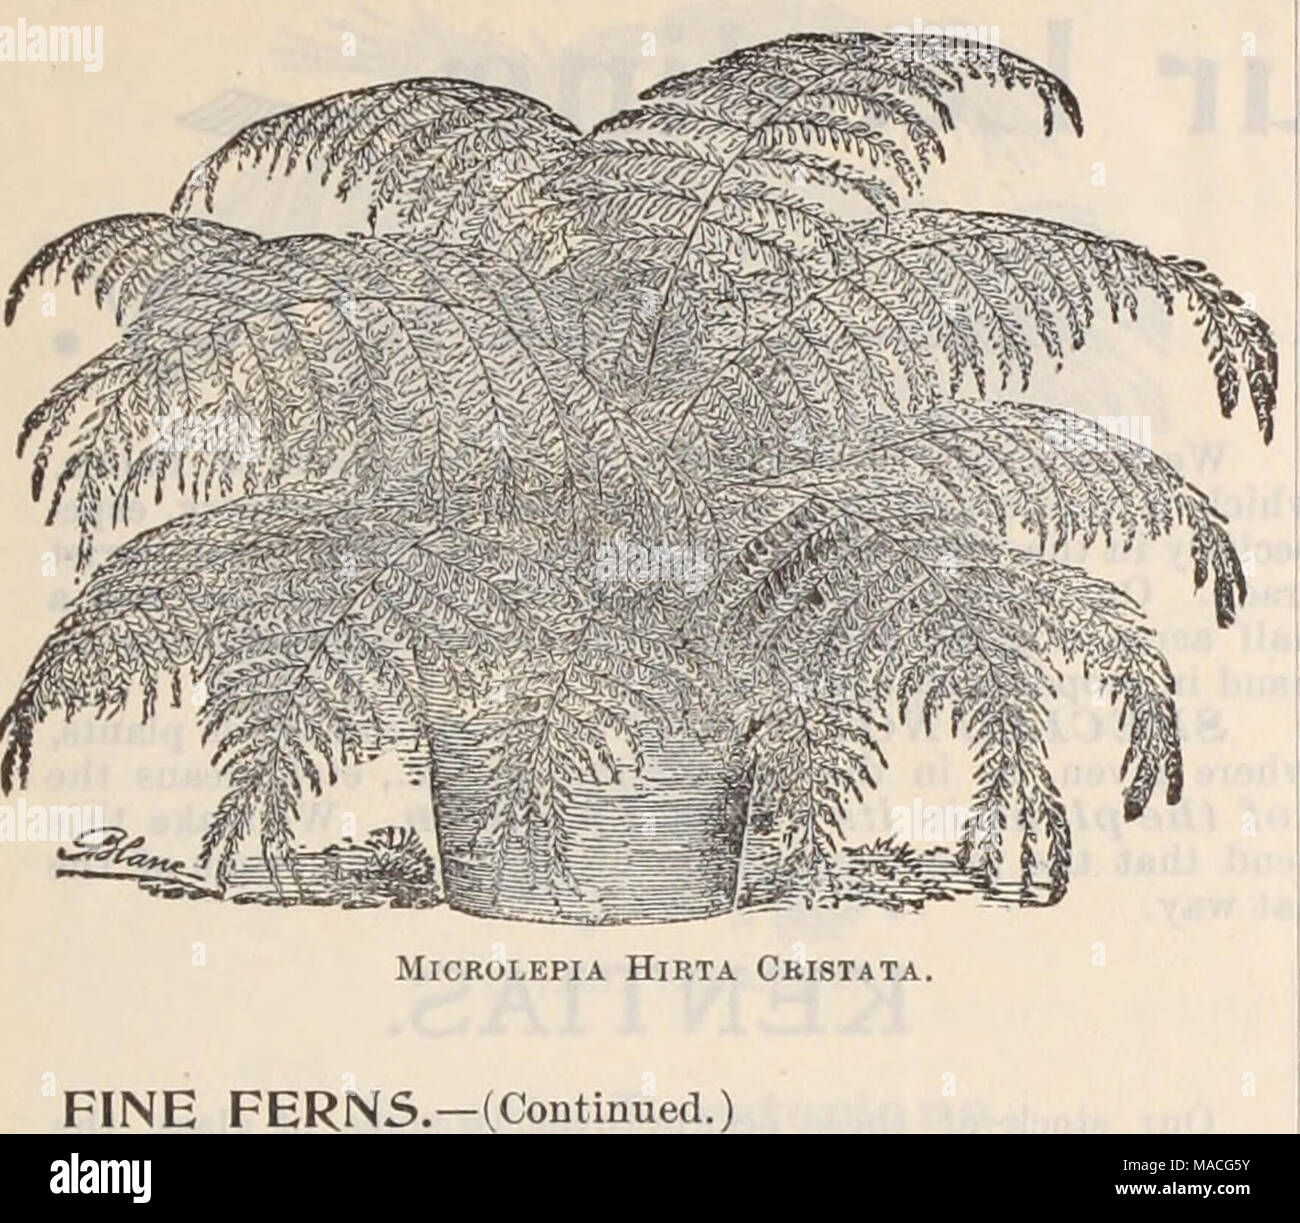 . Dreer's wholesale price list / Henry A. Dreer. . FINE FERNS.-(Continued.) Size pots Cyrtomium Falcatum 2 '' Opaca.. U ii Lomaria Ciliata. Nephrodium Hertipes. 3 &quot; &quot; 4 Davallia Stricta 2J &quot; 3 &quot; Fijiensis Plumosus 3 &quot; &quot; Majus 3 Dictyogramma Japonica 3 Didymochlaena Truucatula 3 Doodia Aspera multifida 2J &quot; &quot; &quot; 3 Qymnogramma Sulphurea 3 Lastrea Aristata Variegata 2 3 &quot; Chrysoloba 2} '« &quot; 3 2i 3 n 3 Lygodium Scandens 3 &quot; Dichotomum 3 Microlepia Hirta Crista 2J &quot; 3 3 5 3 2i n 3 4 6 4 4 3 n 3 5 2 3 3 2} 3 3 3 2} 3 4 2 3 3 2 3 Nephro Stock Photo